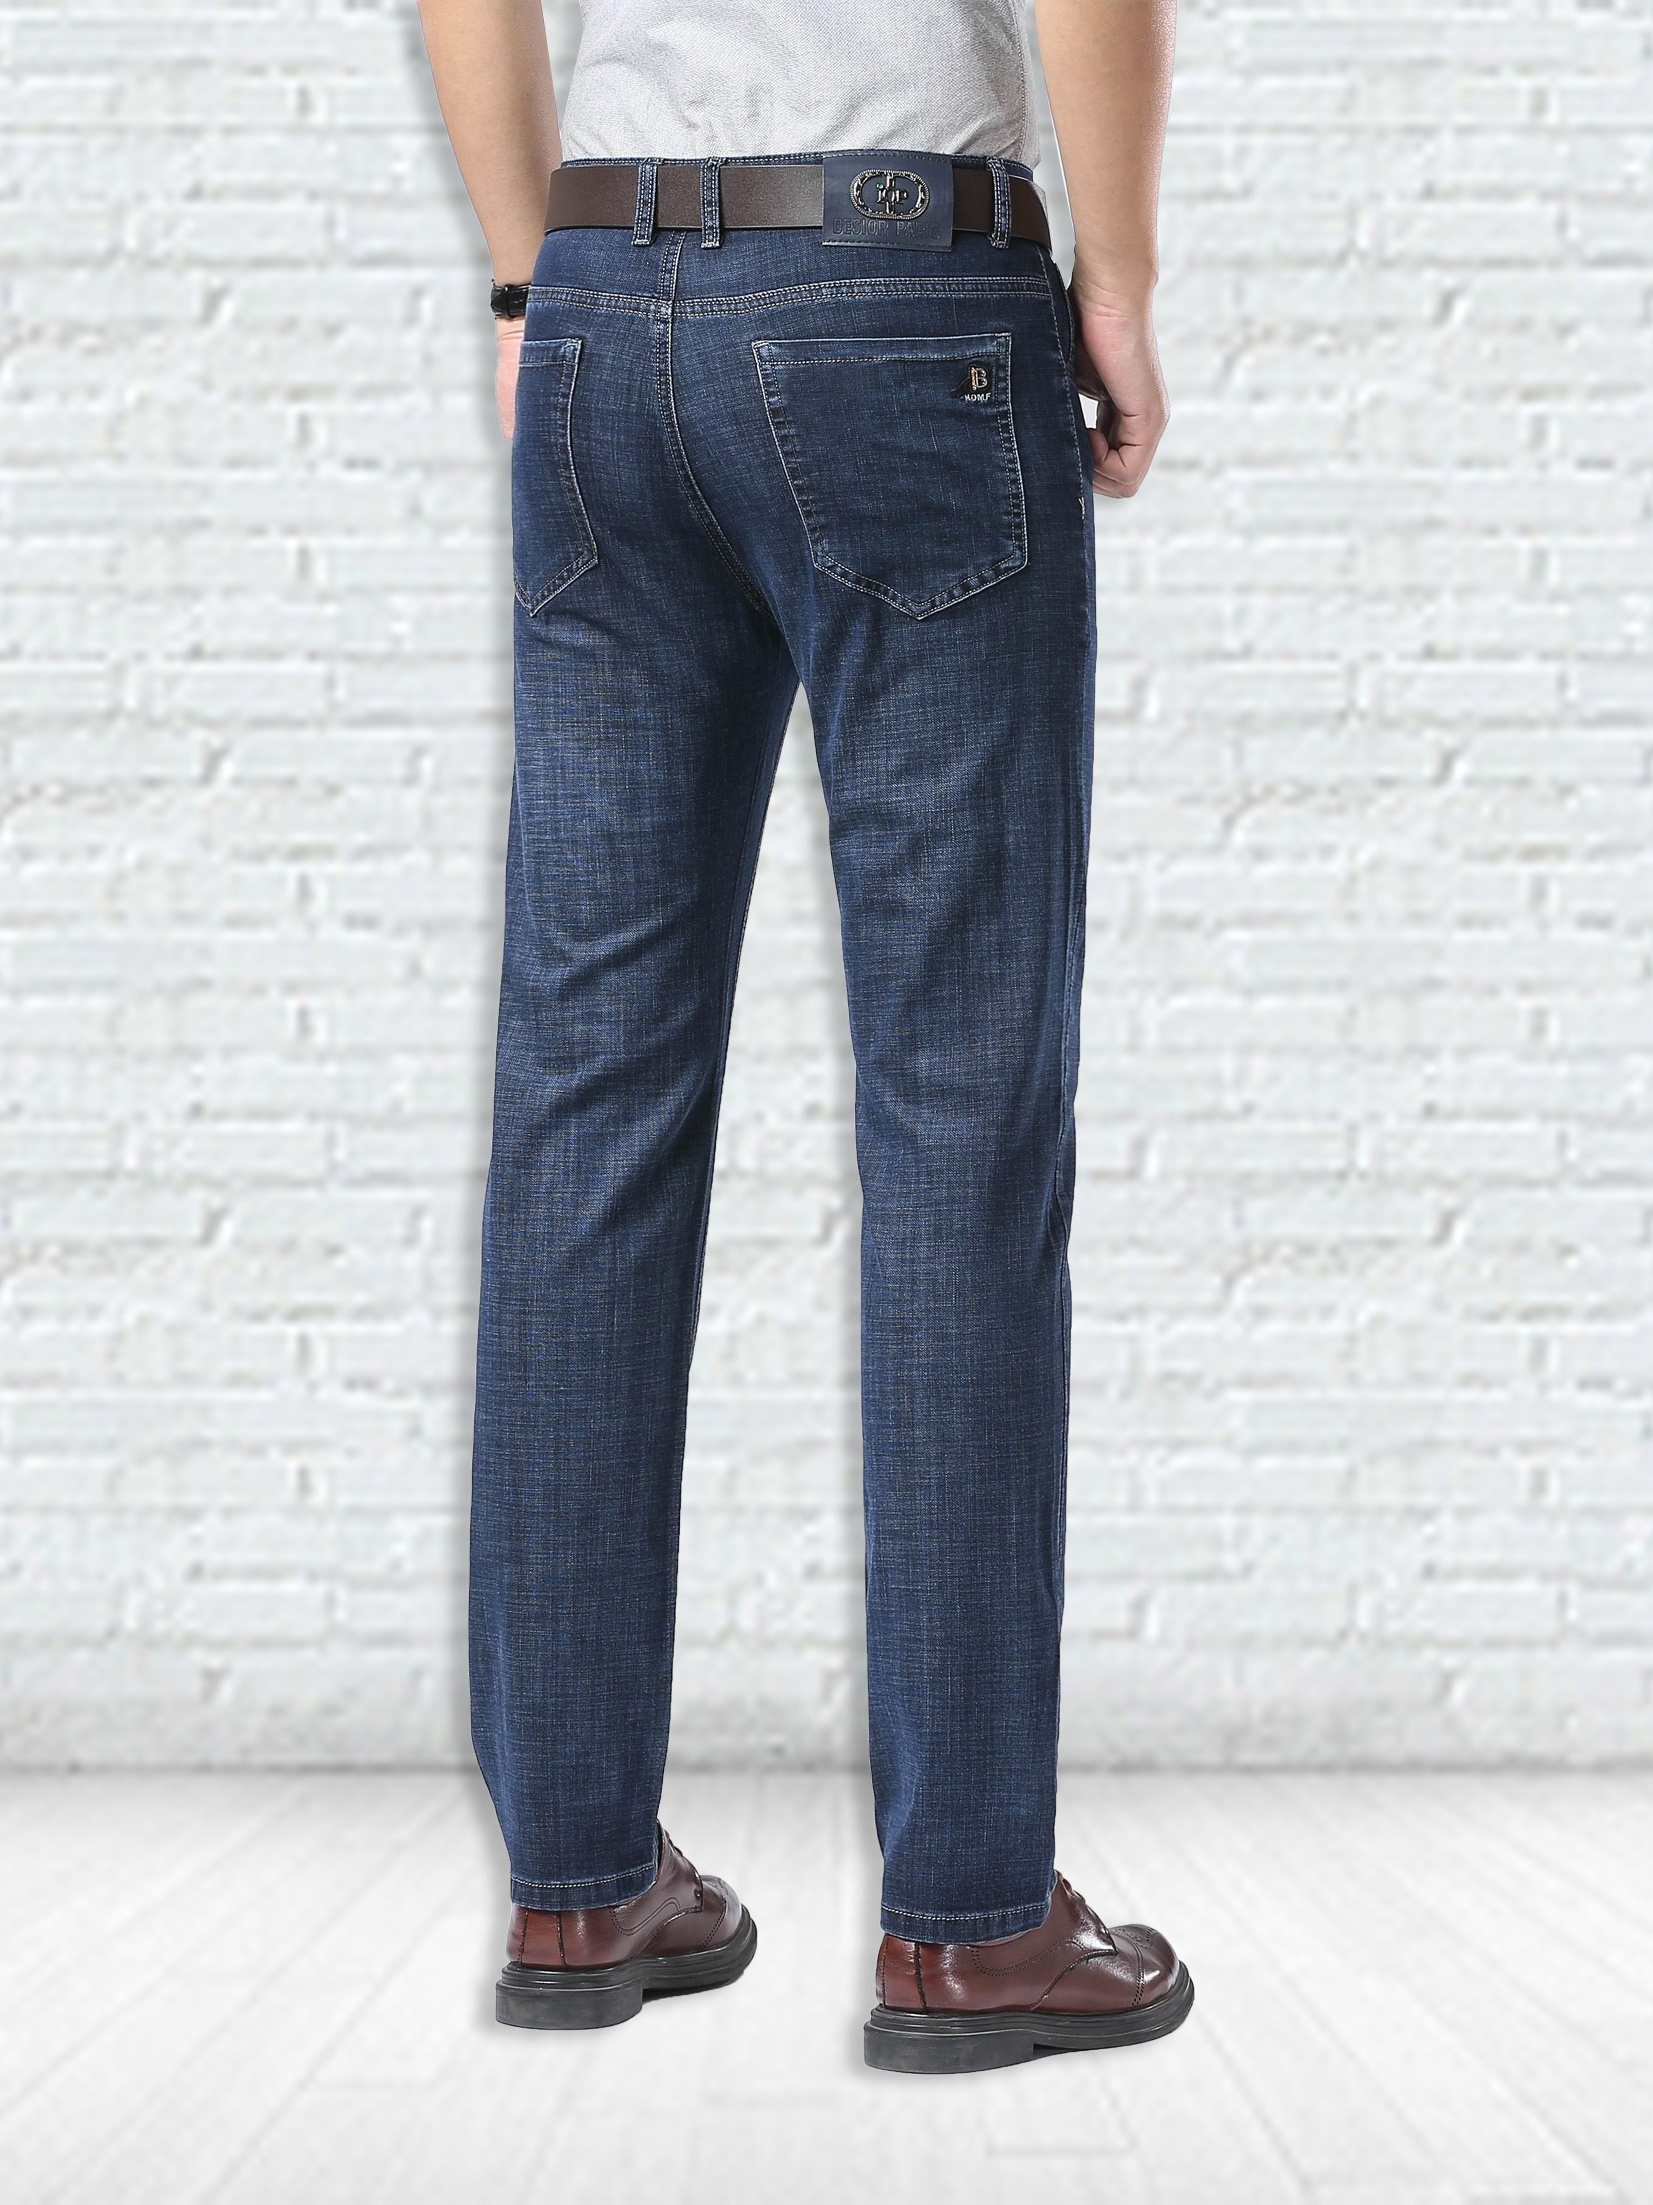 Slim Fit Straight Leg Cotton Jeans Men's Casual Street Style